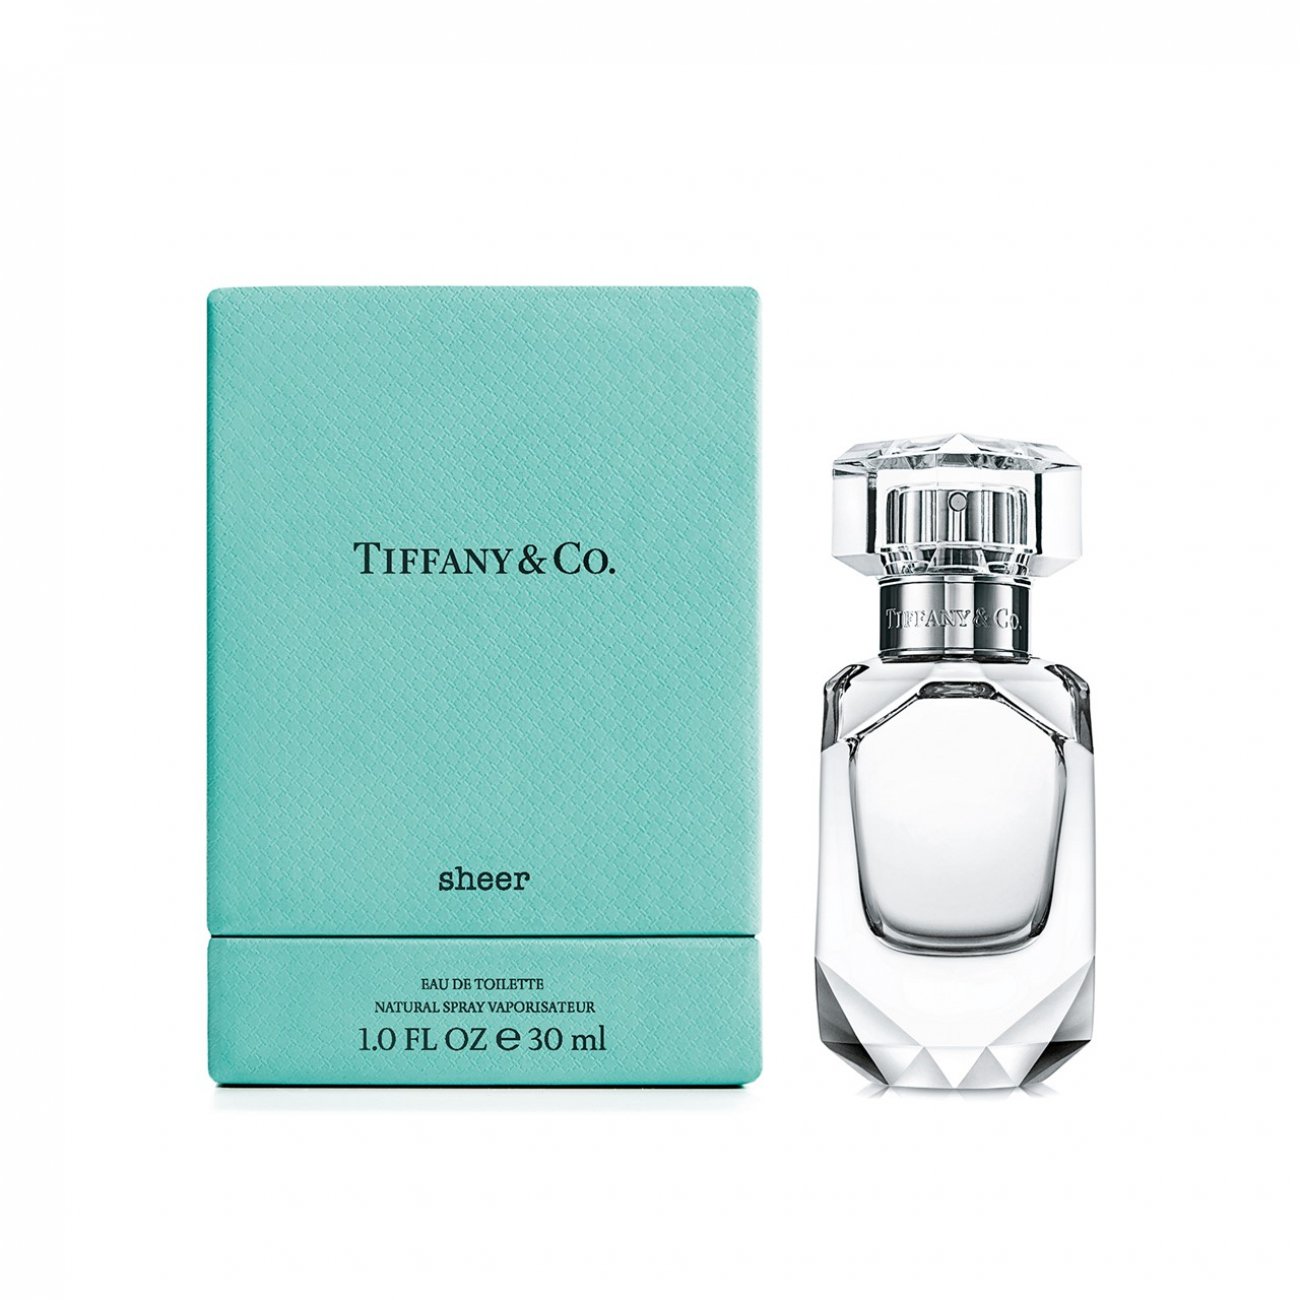 Tiffany & Co. Sheer Eau de Toilette 30ml (1.0fl oz)